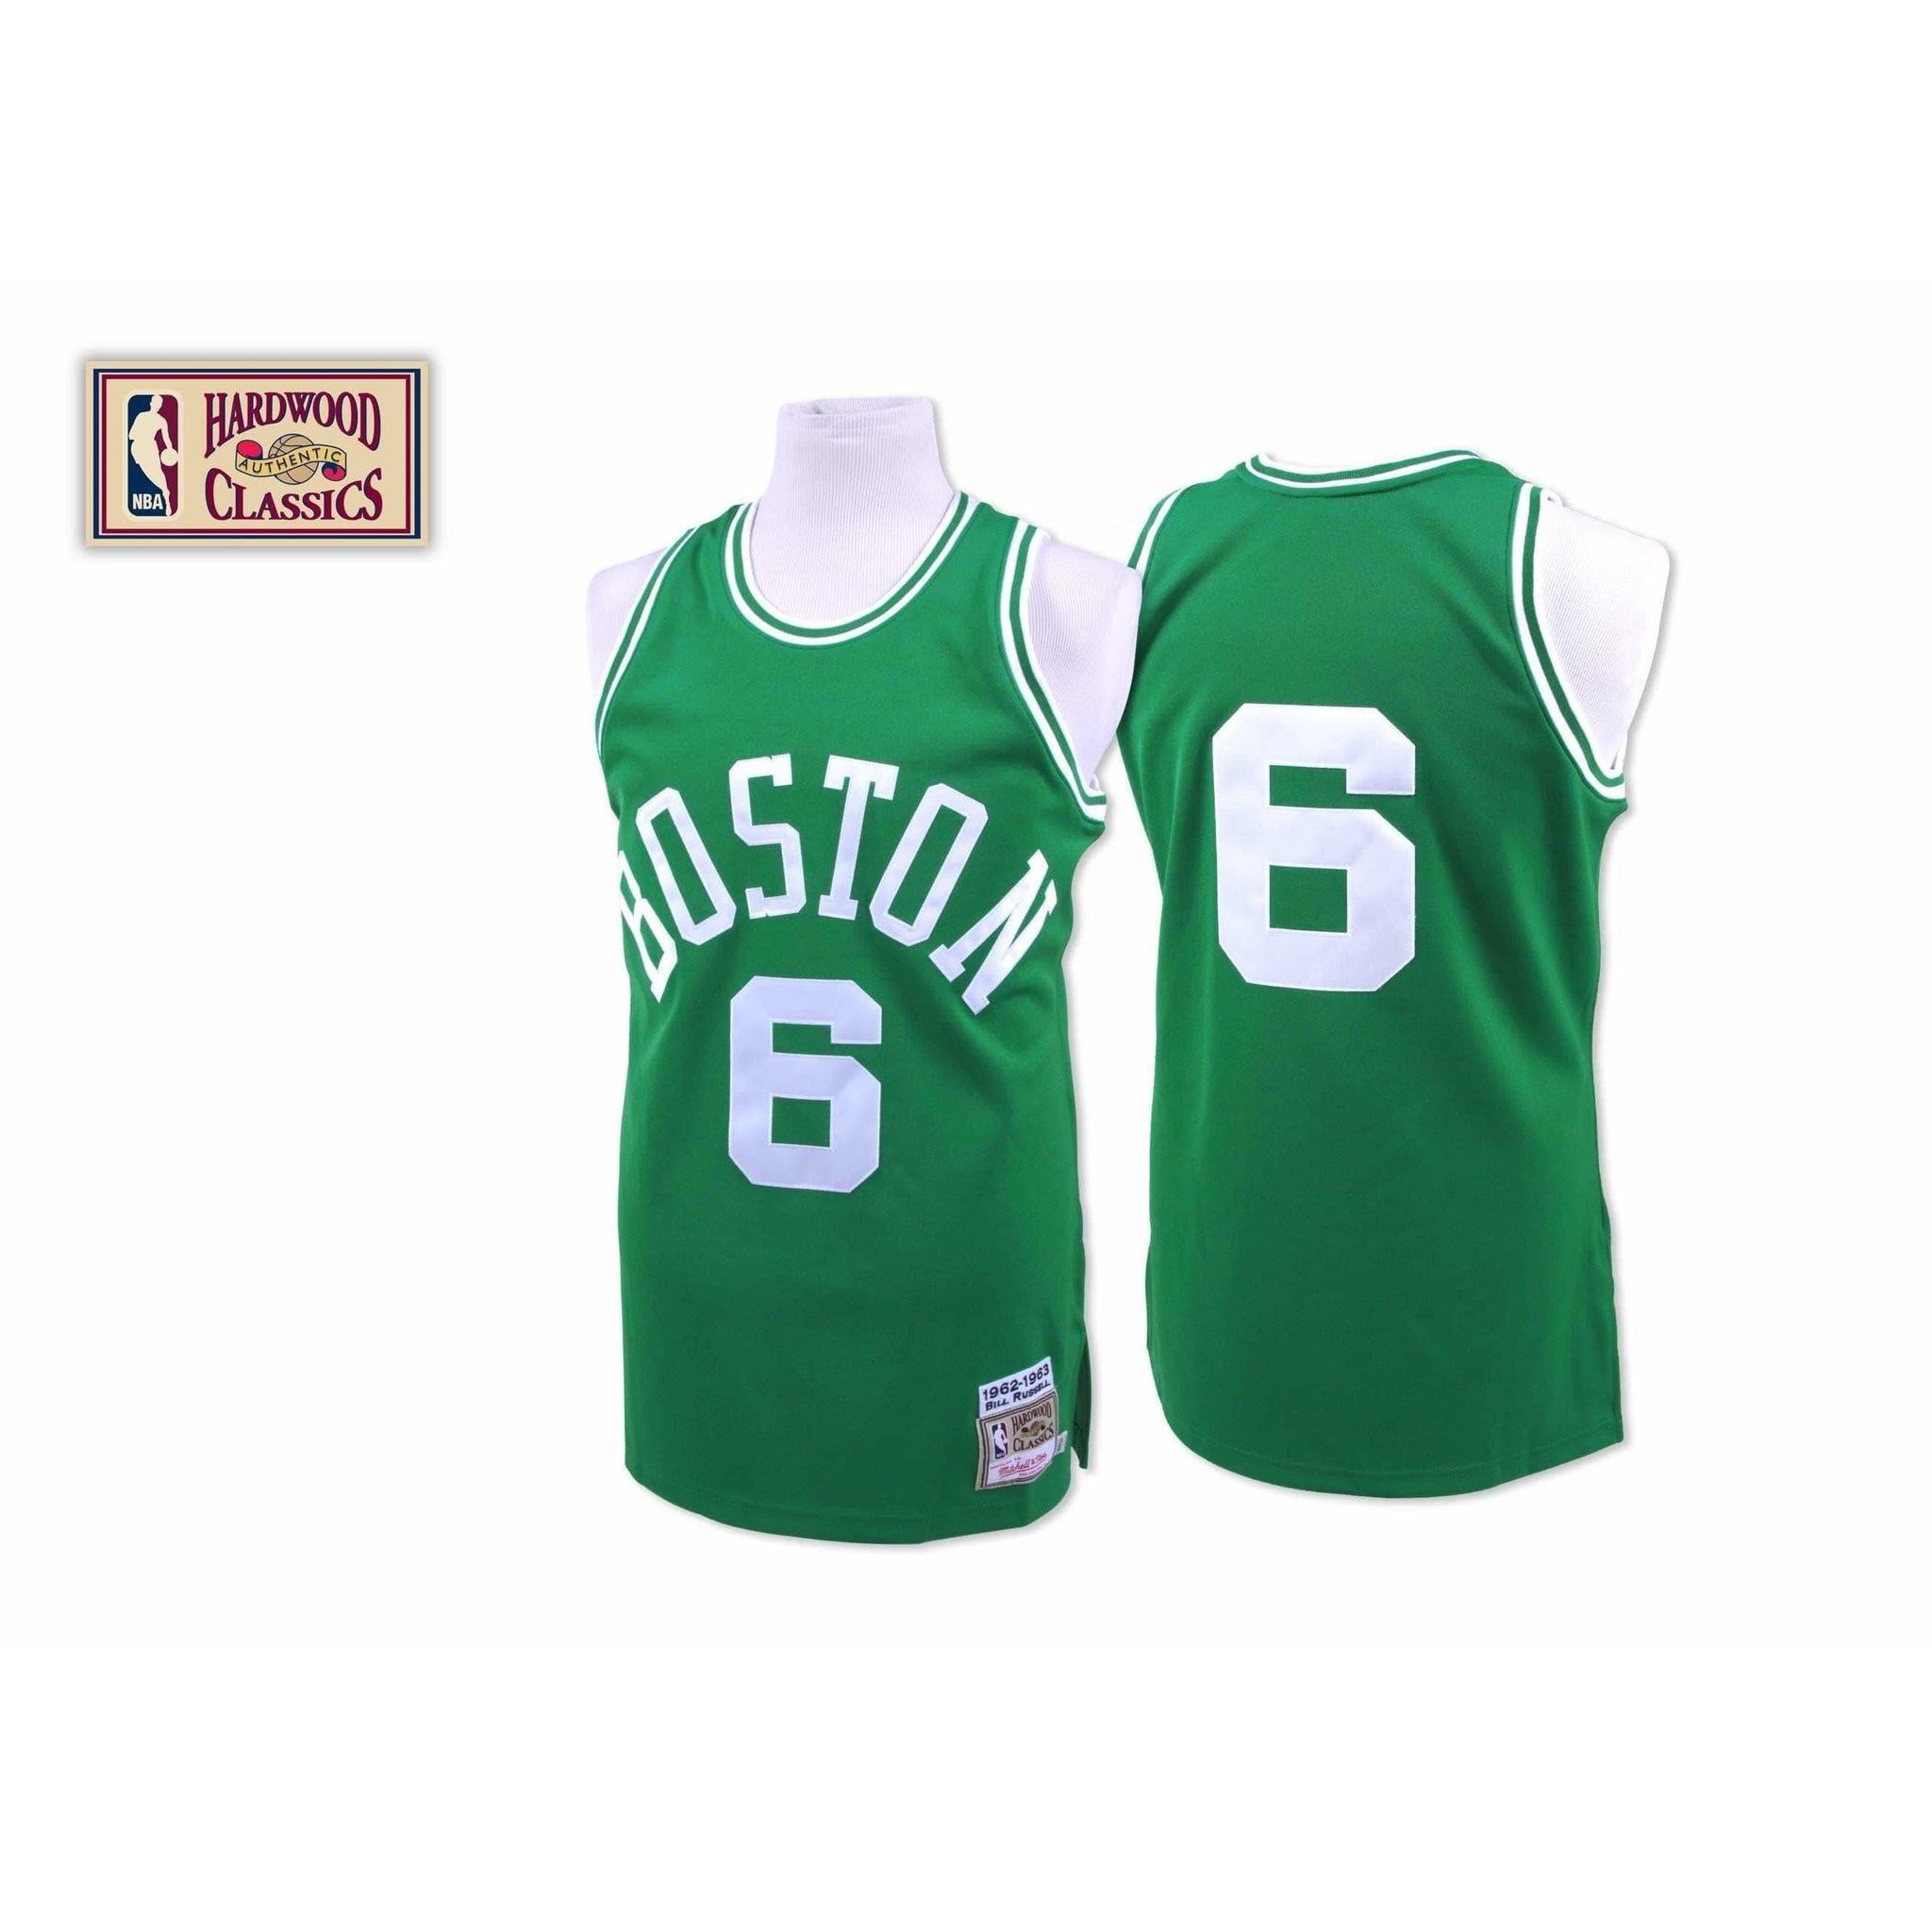 Bill Russell Signed Mitchell & Ness 1962-63 Boston Celtics Jersey